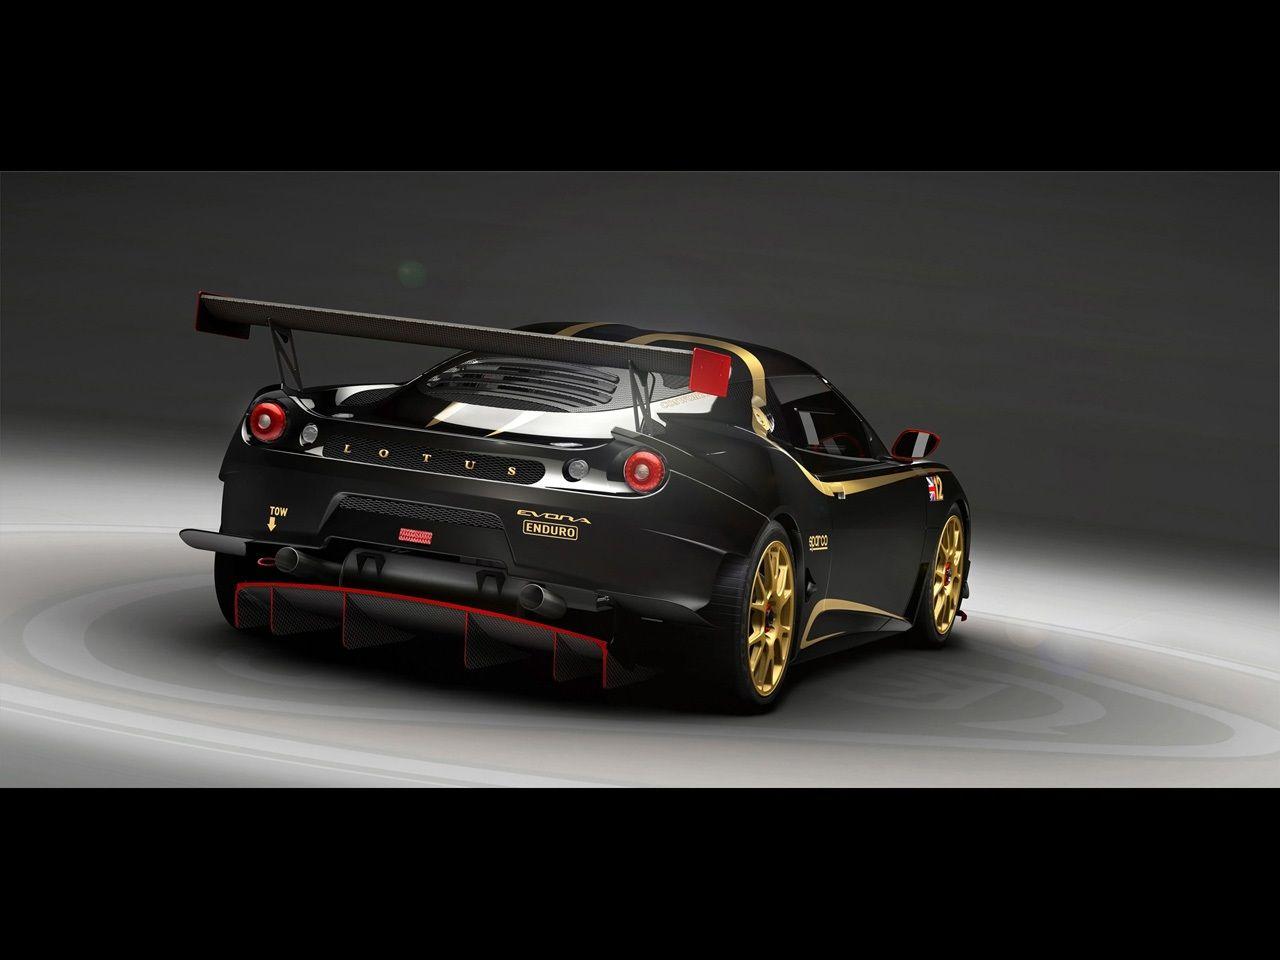 Lotus Car Wallpaper. COOL CARS. Sports Cars Free HD